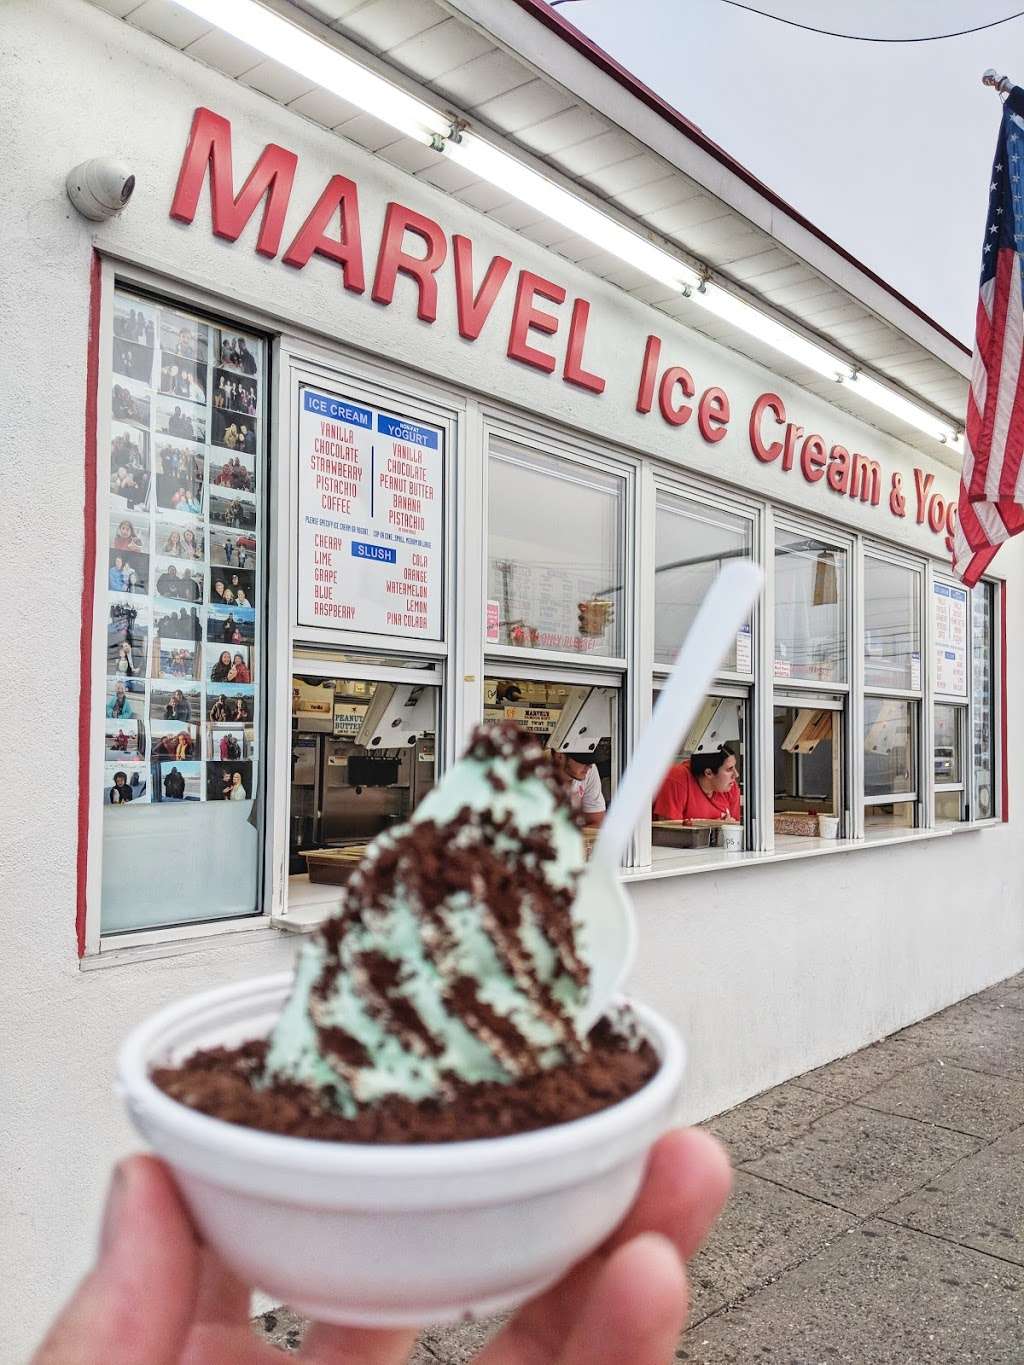 Marvel Frozen Dairy | 258 Lido Blvd, Lido Beach, NY 11561 | Phone: (516) 889-4232